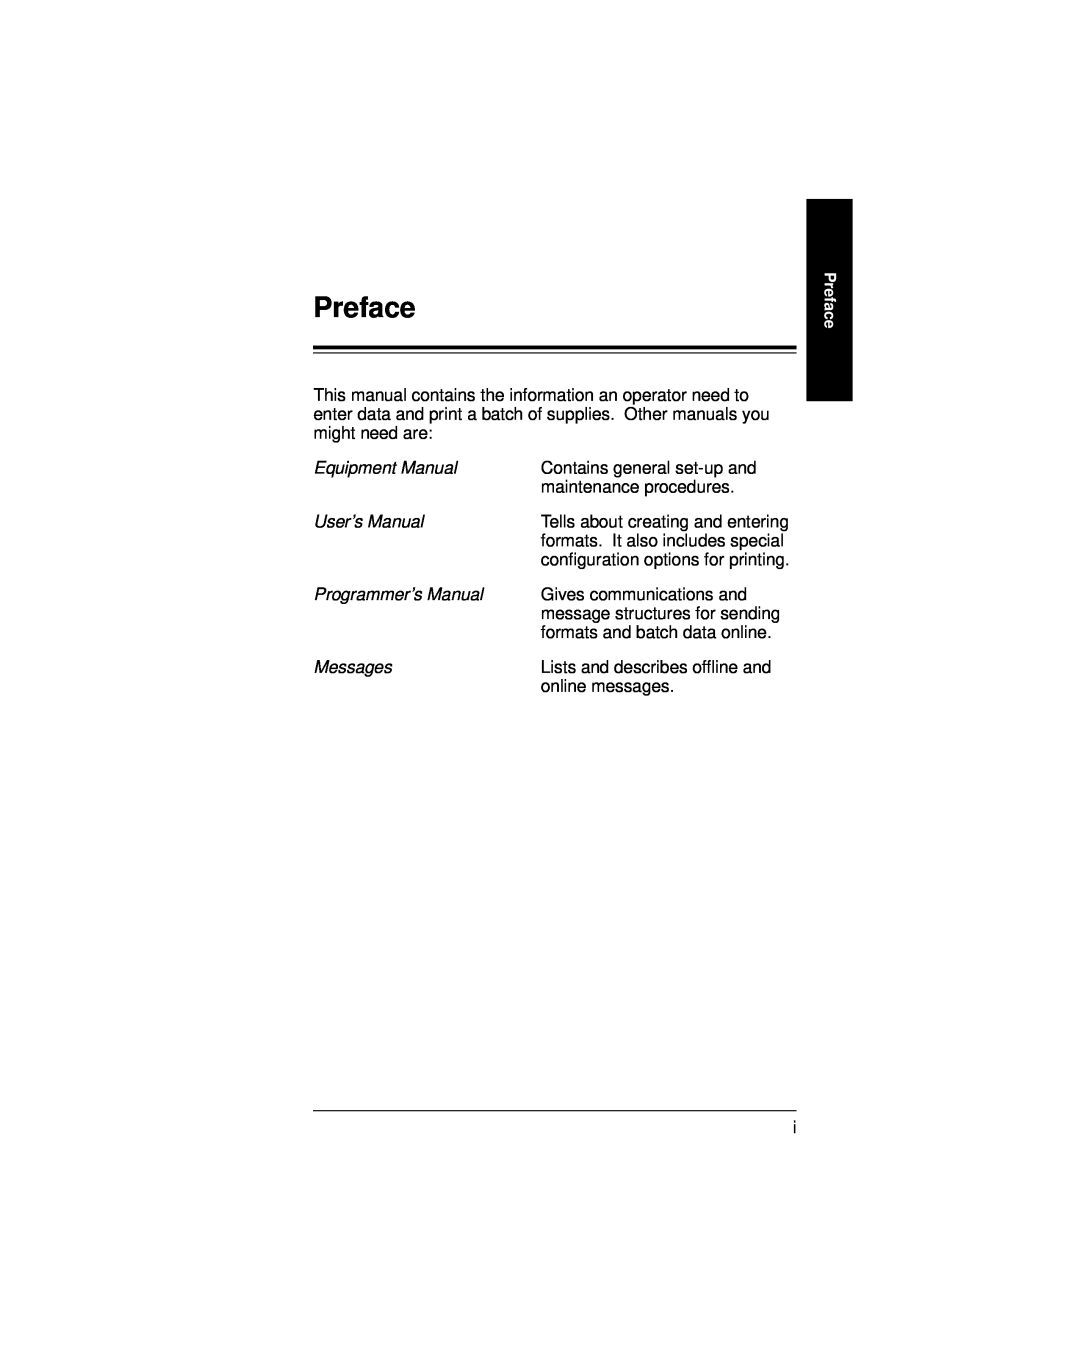 Paxar 9400 manual Preface 